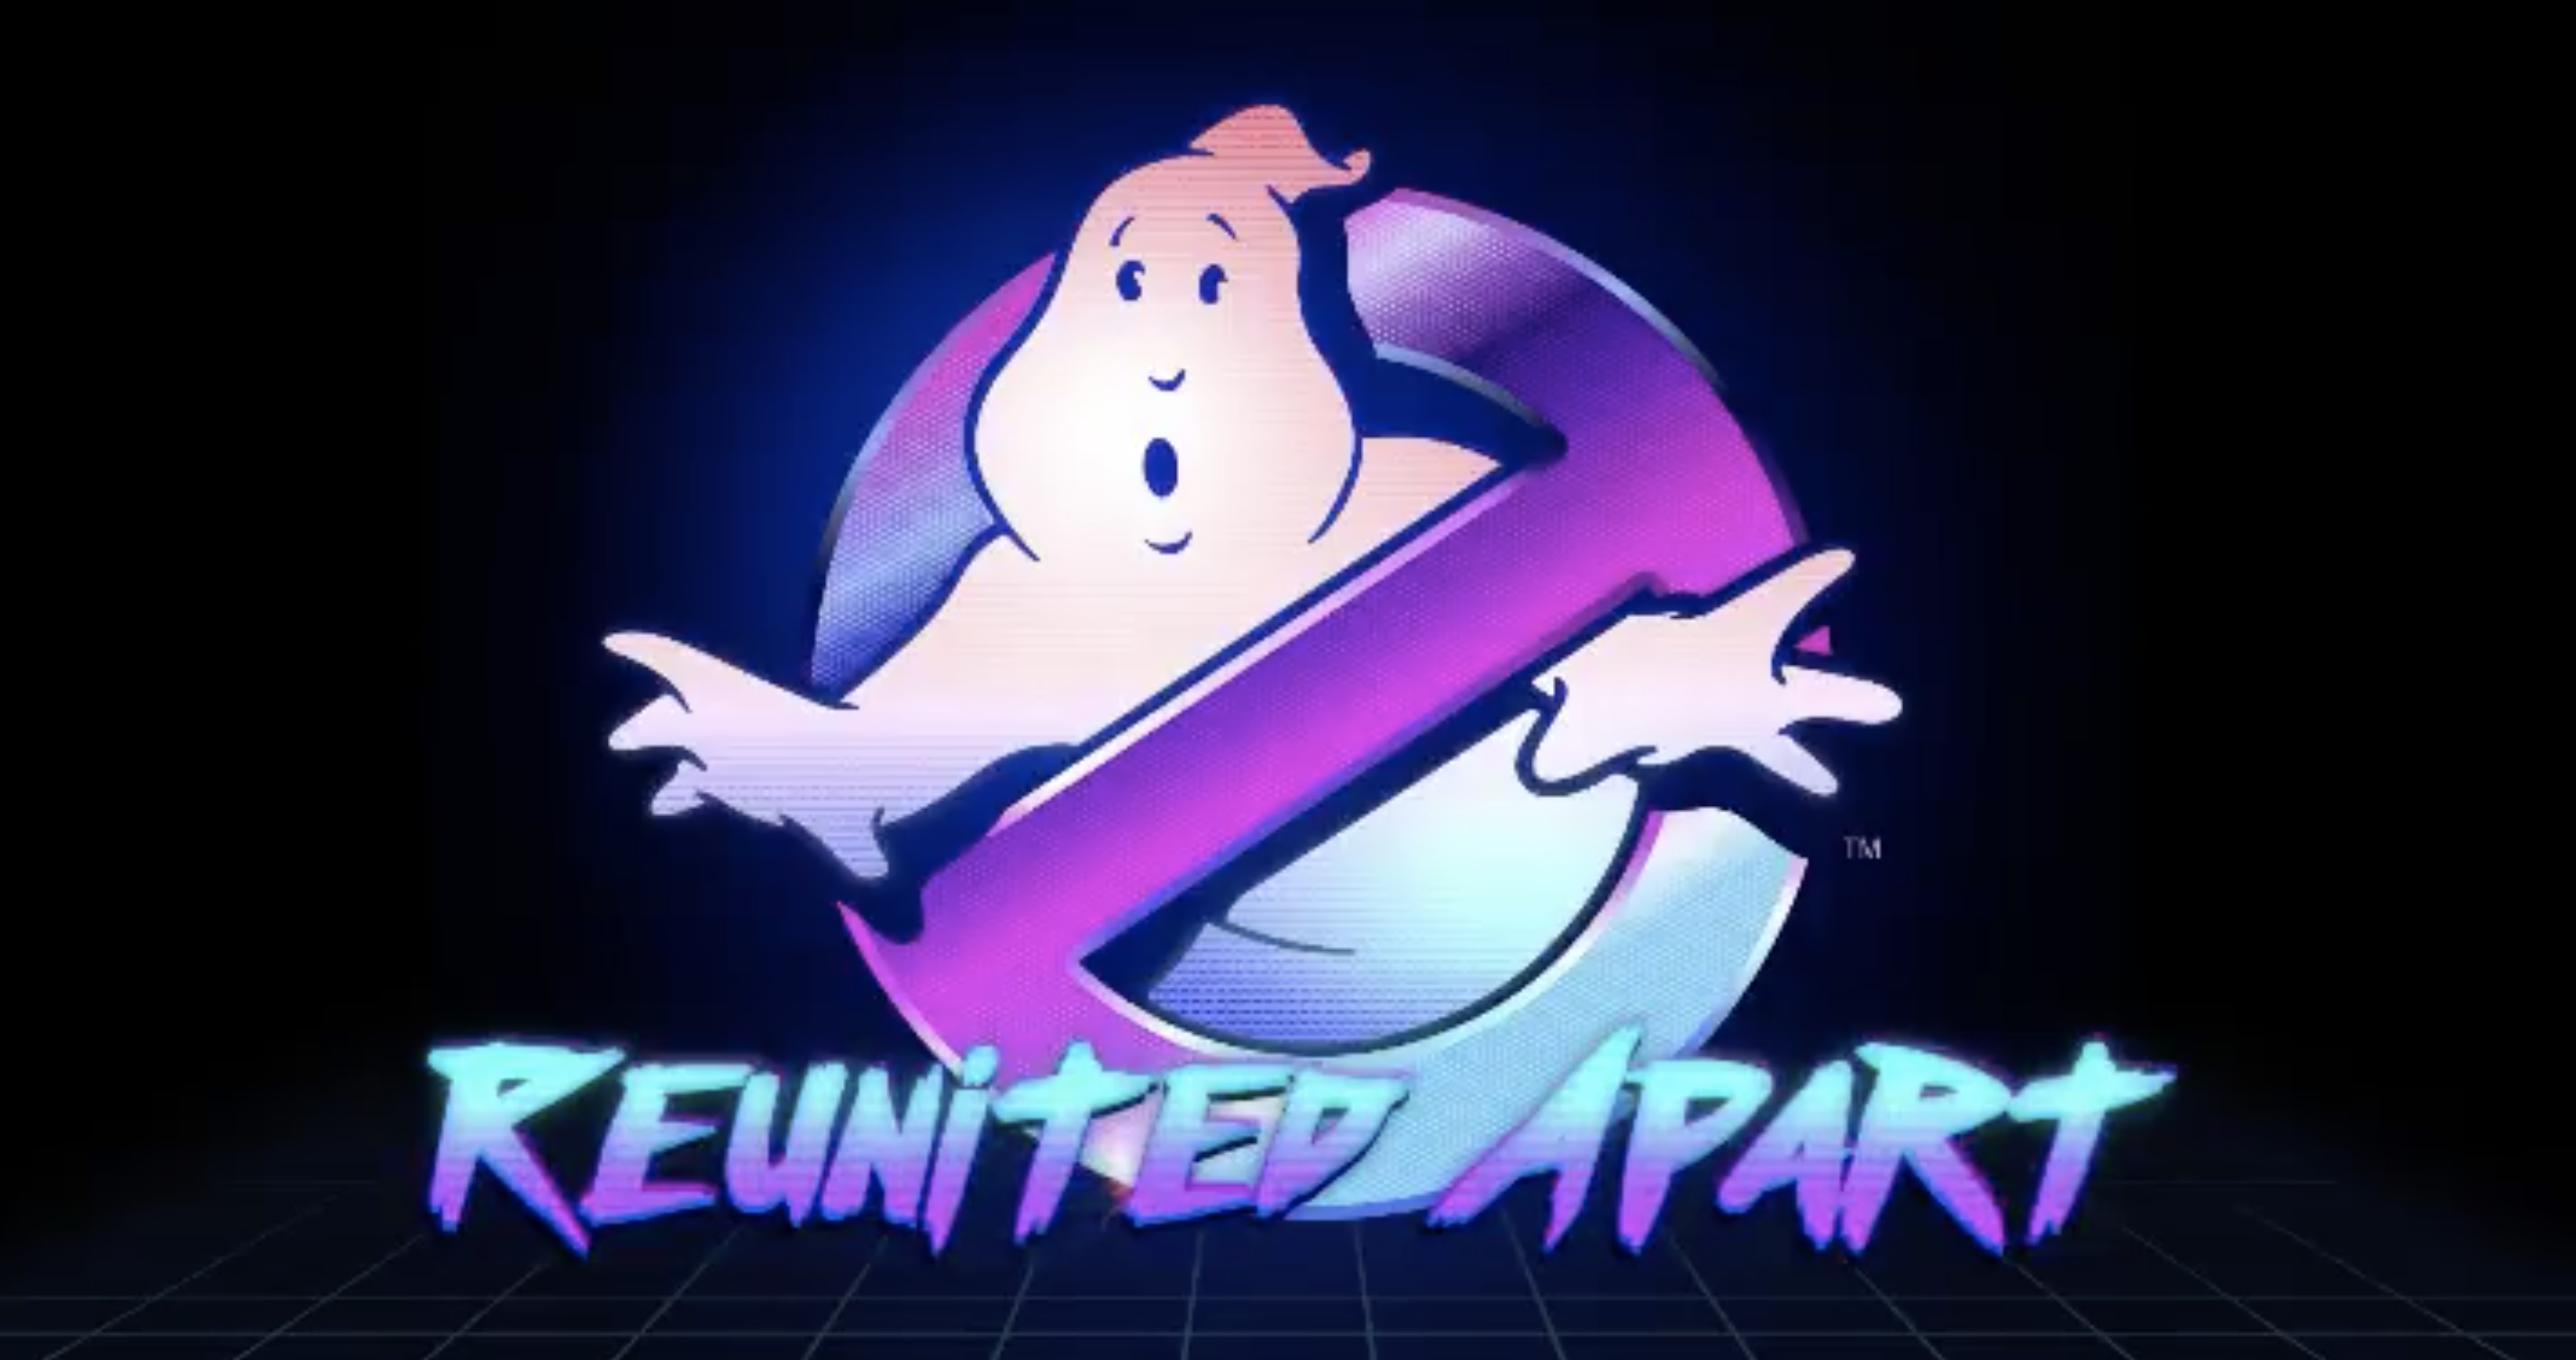 Ghostbusters: Reunited Apart brings the ghostbusting crew back ...